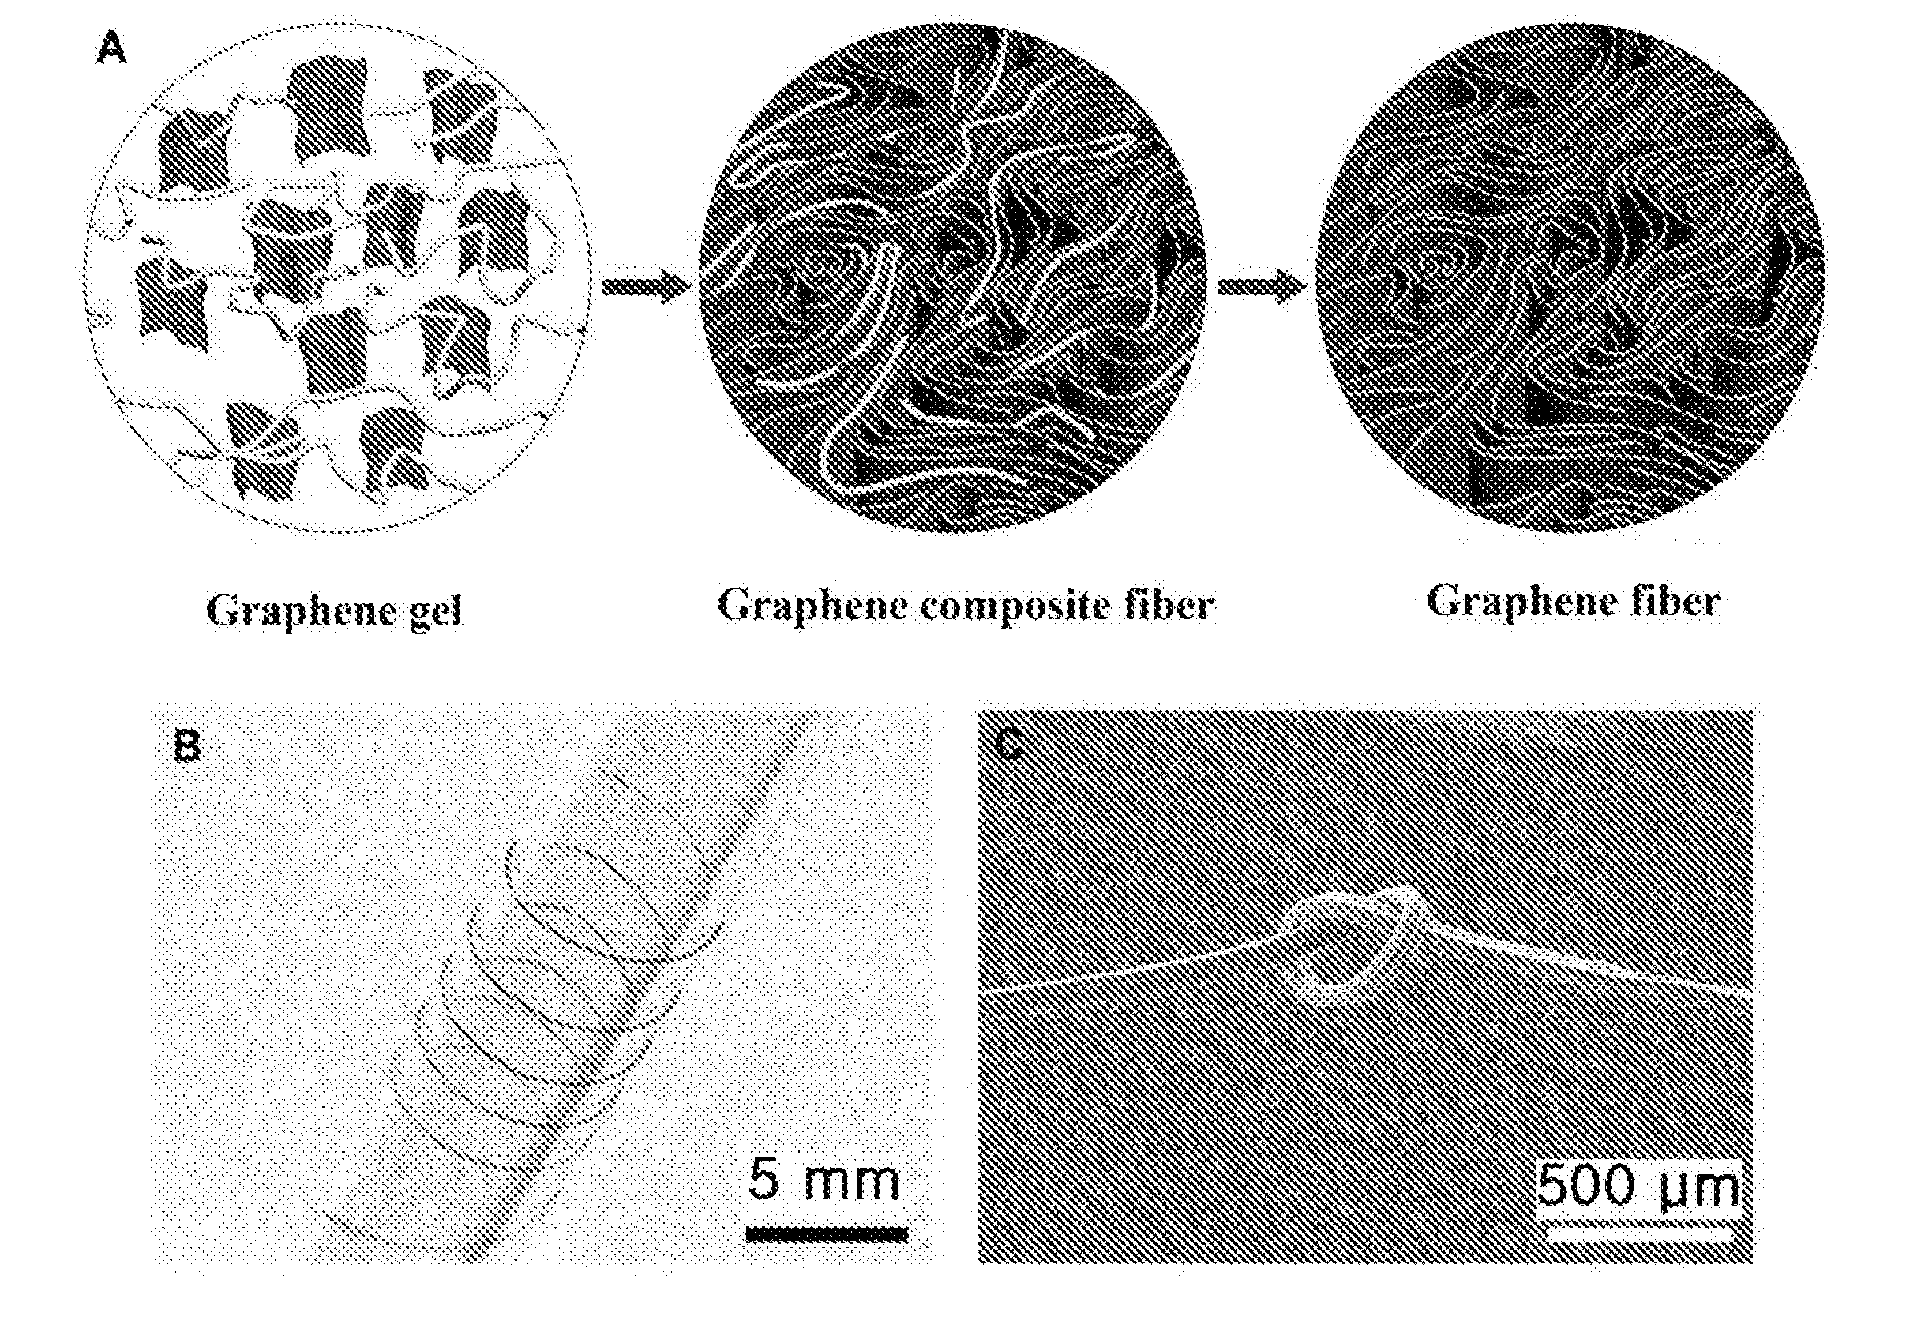 Graphene fiber and method for manufacturing same